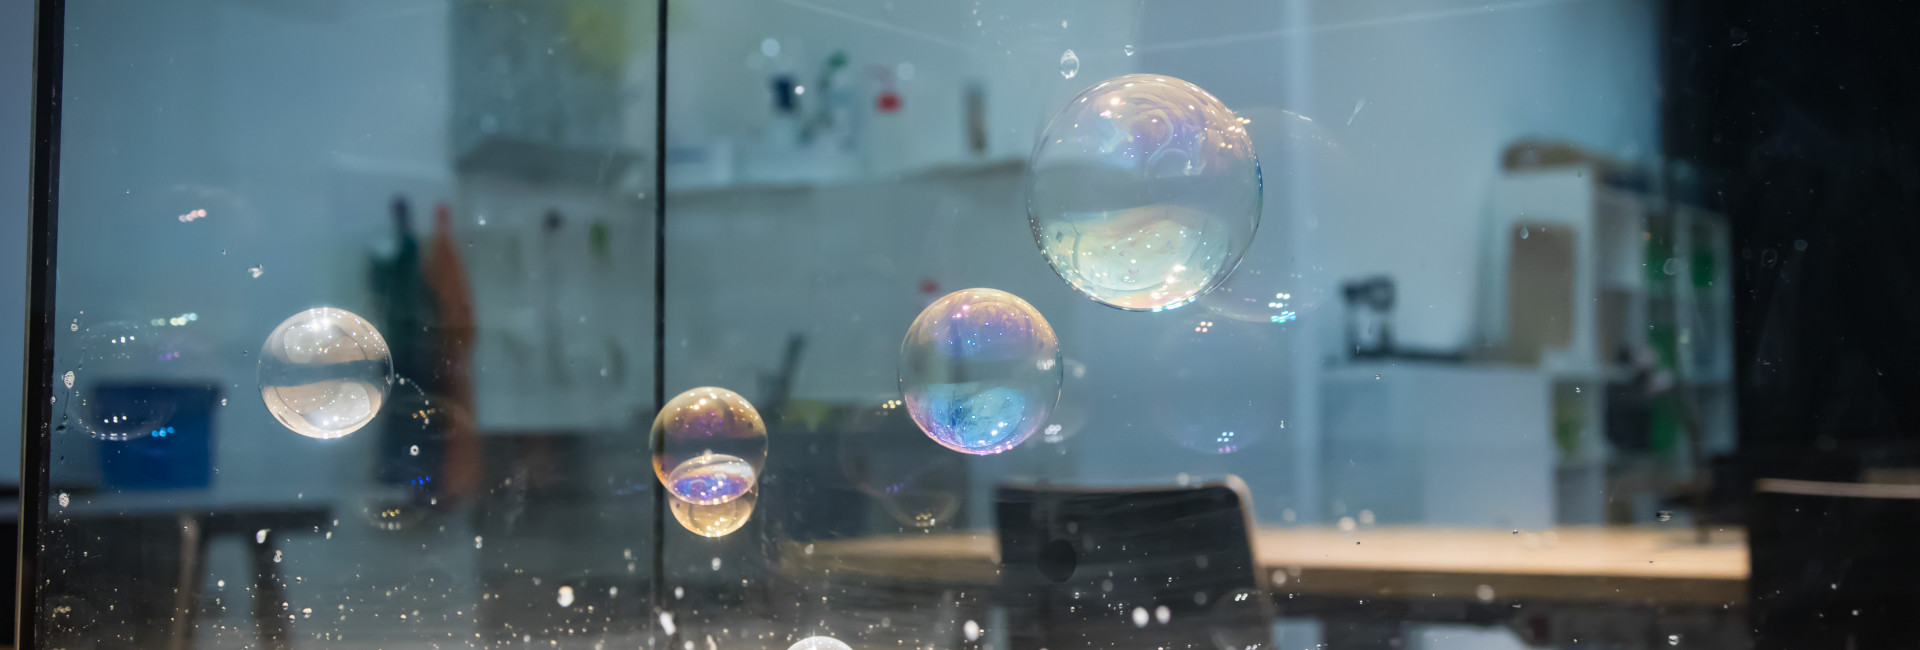 Trampolína pro bubliny